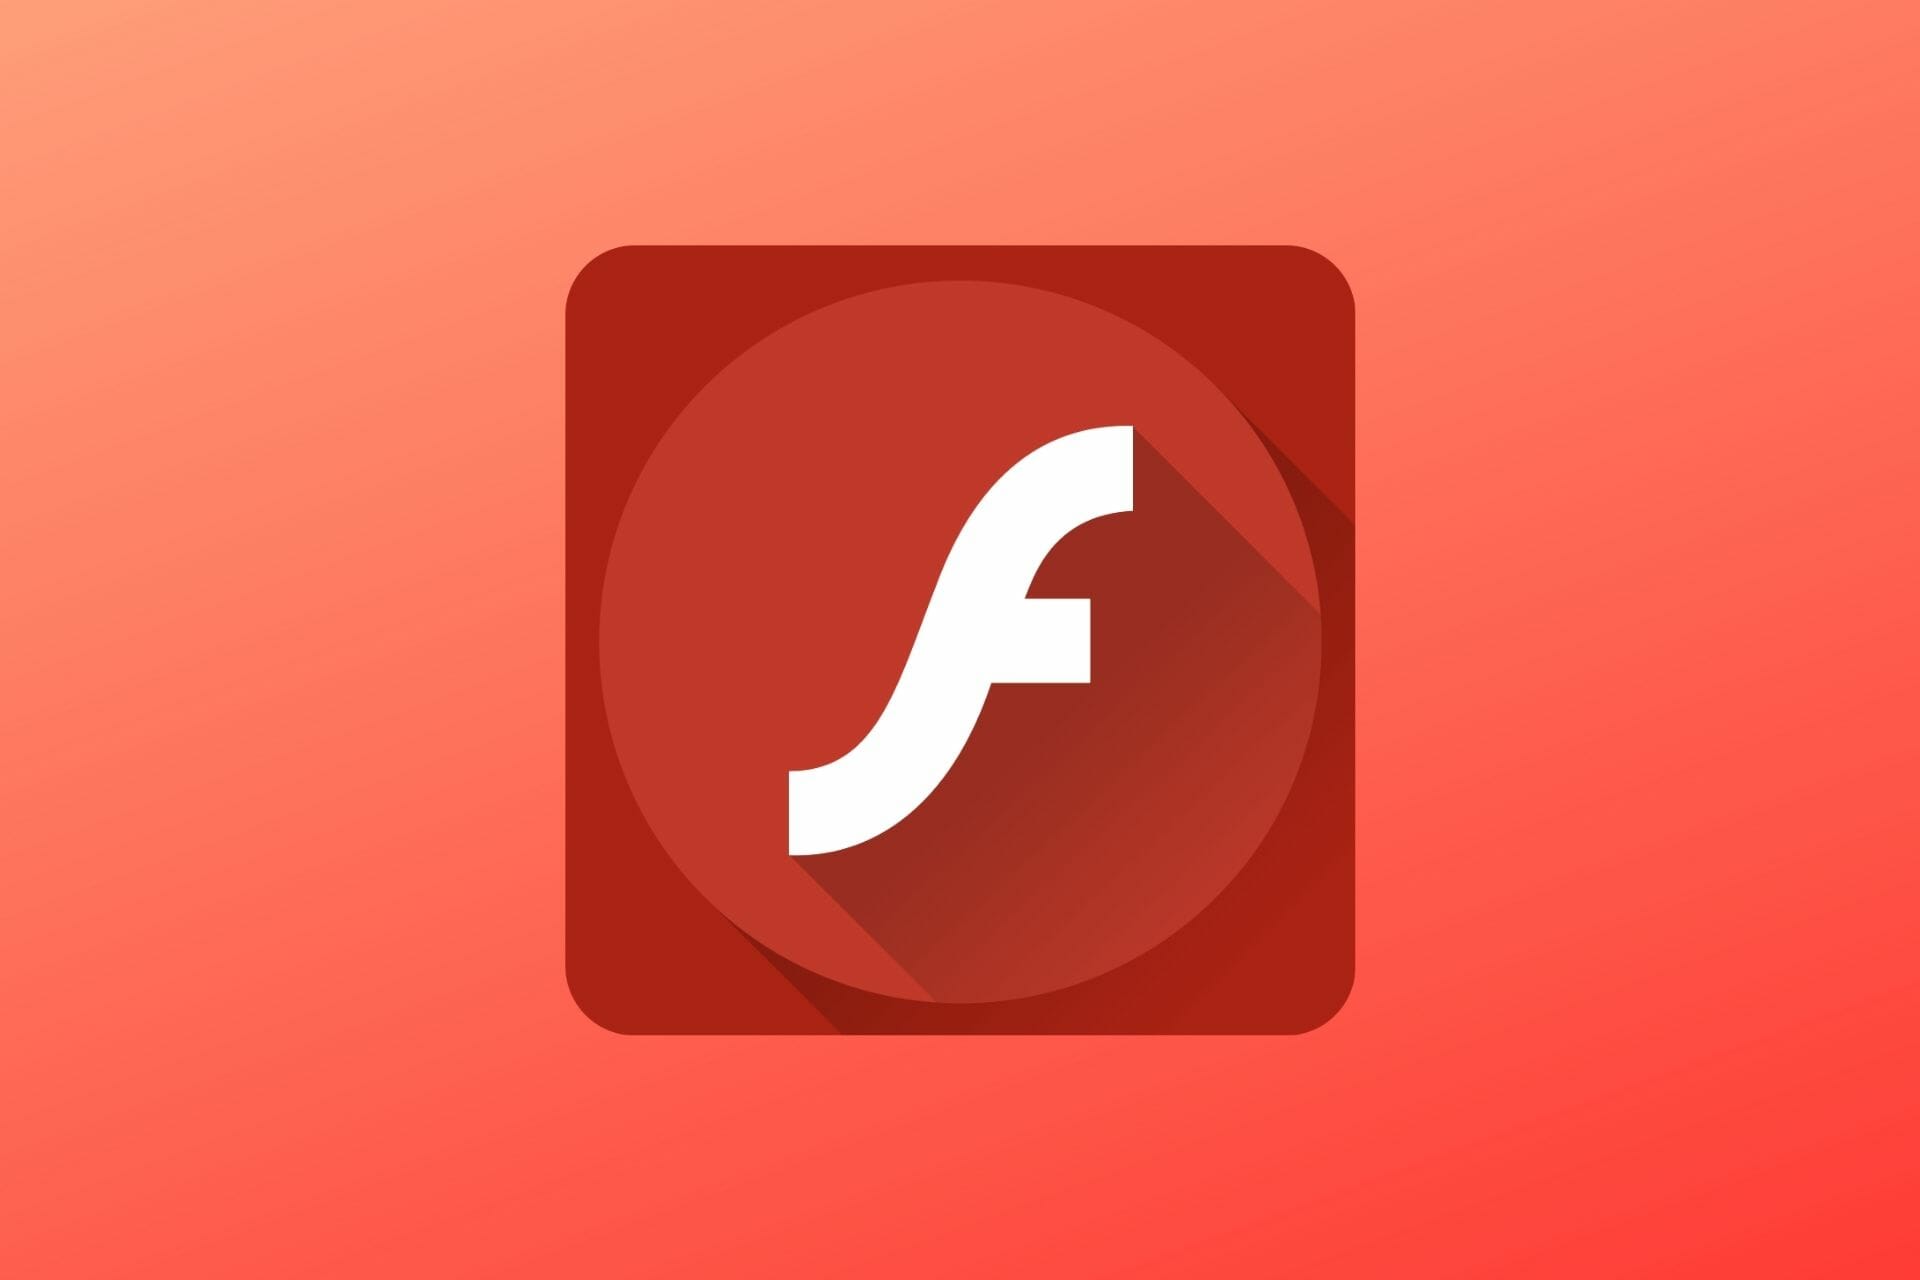 adobe flash player 64 bit free download for windows 10